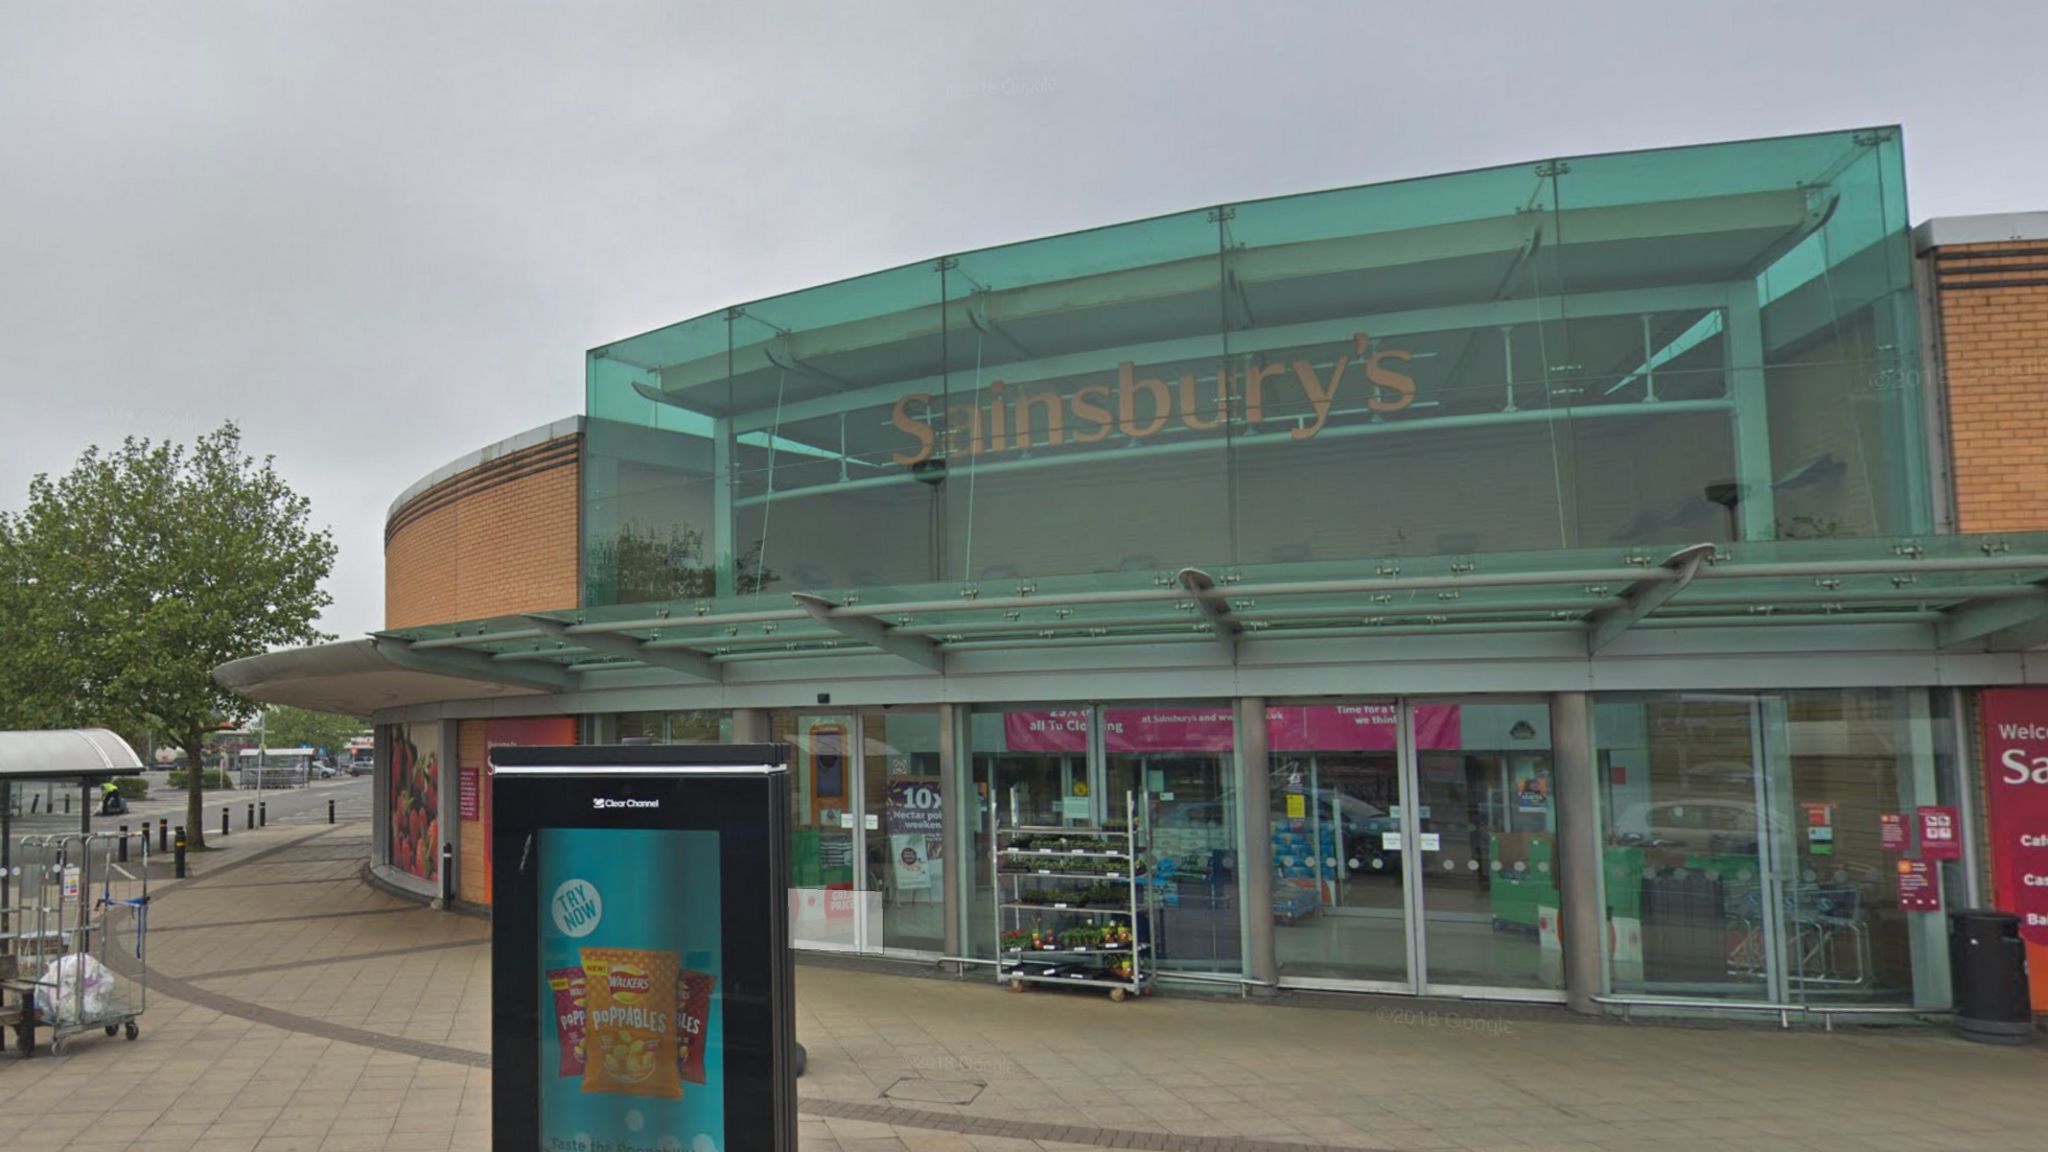 Google maps image of Sainsbury's in Weston-super-Mare